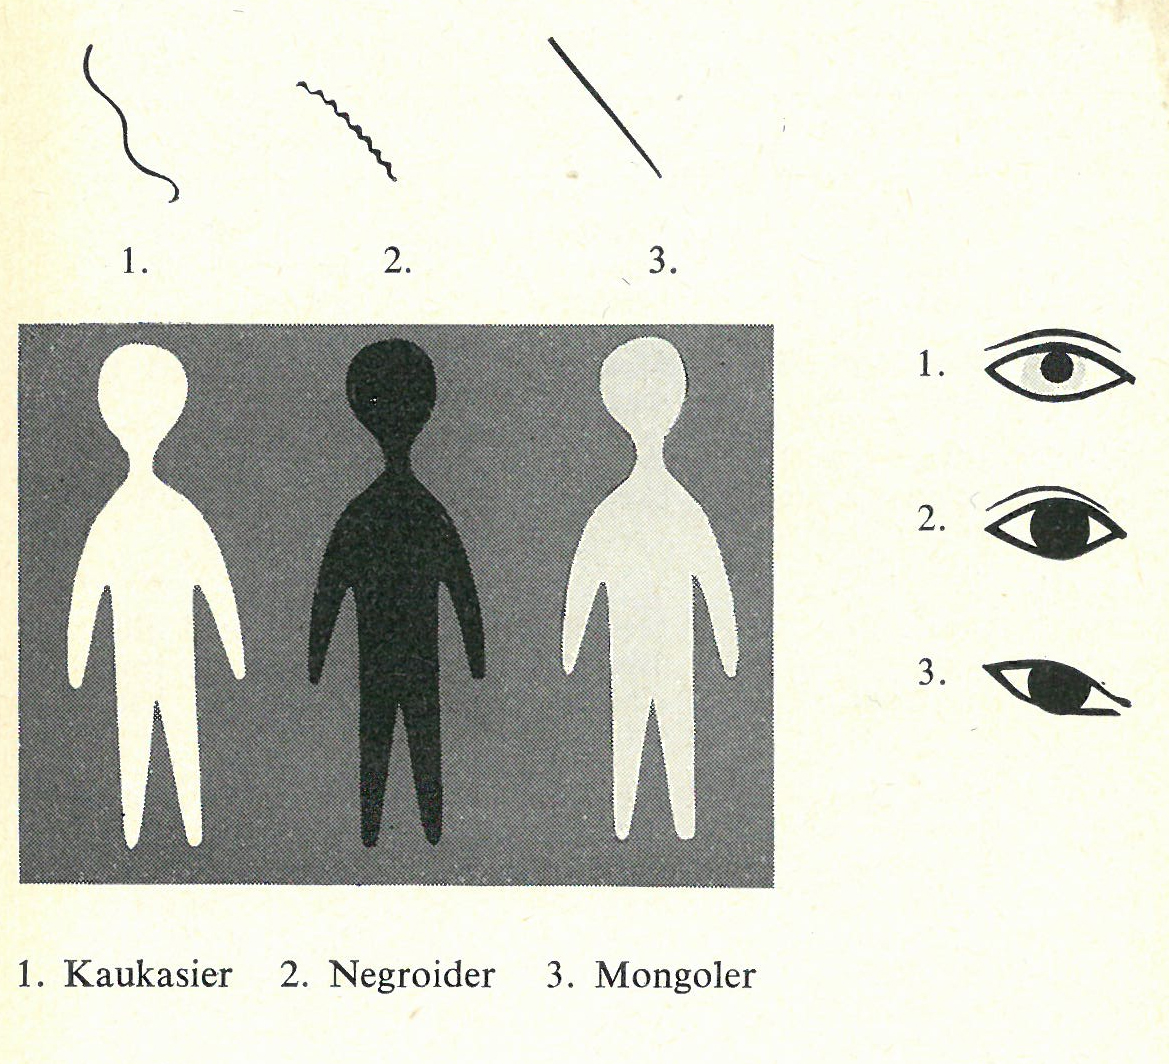 Figure2: From Gunnar Dahlberg, Raser och folk (‘Races and Peoples), 1955.